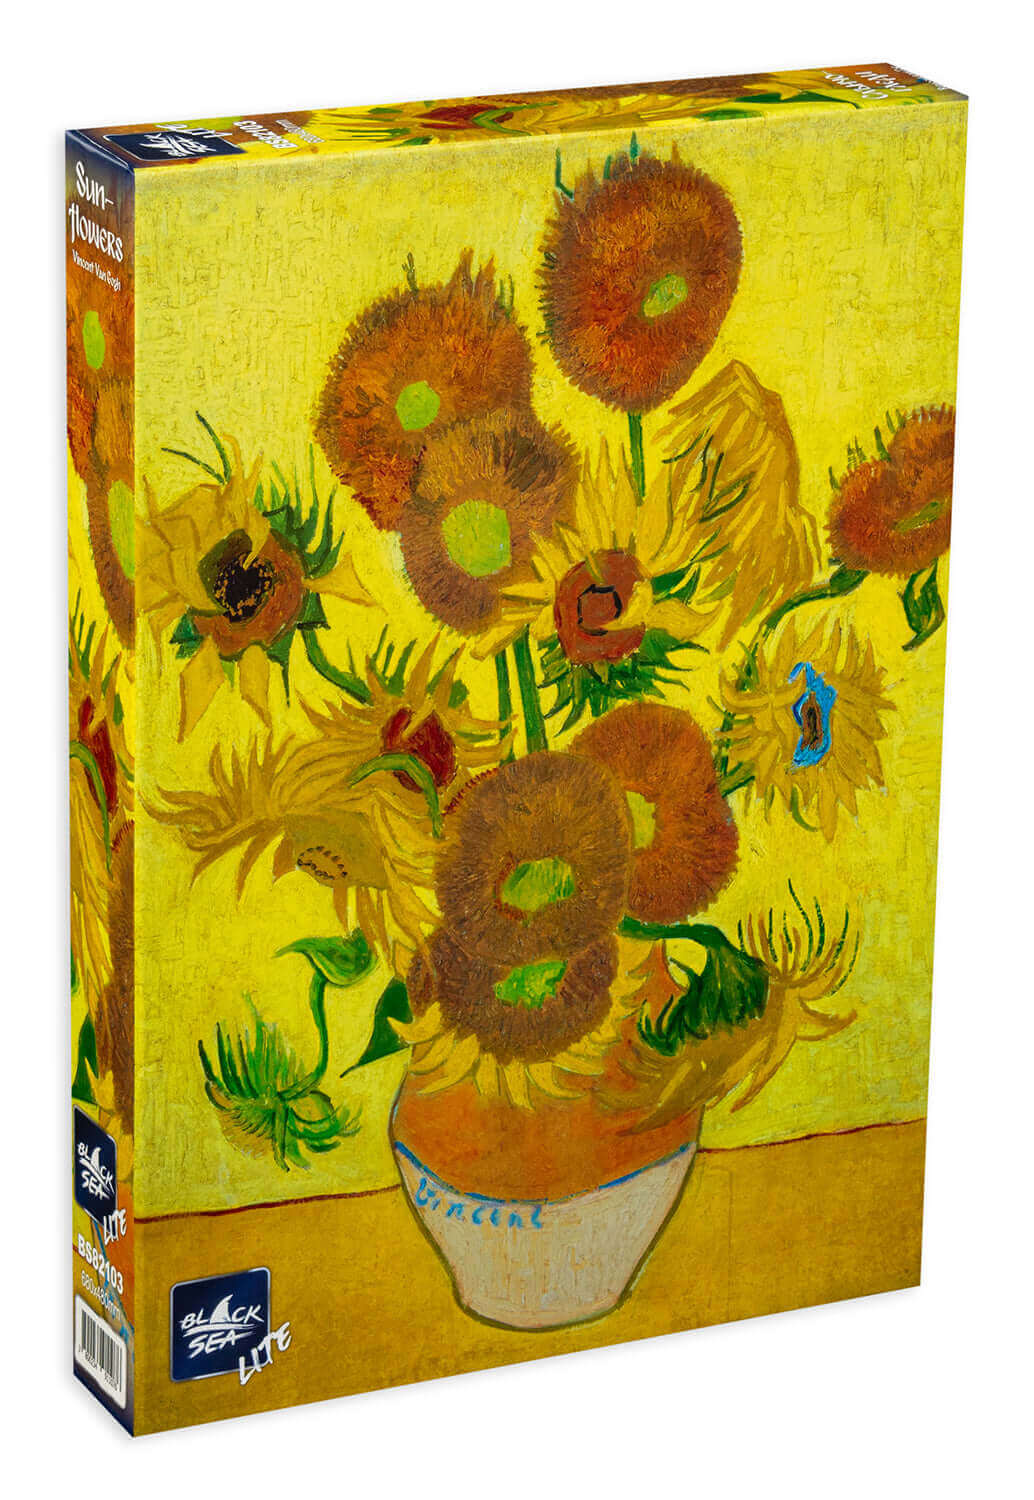 Puzzle Black Sea 1000 pieces - Sunflowers, -